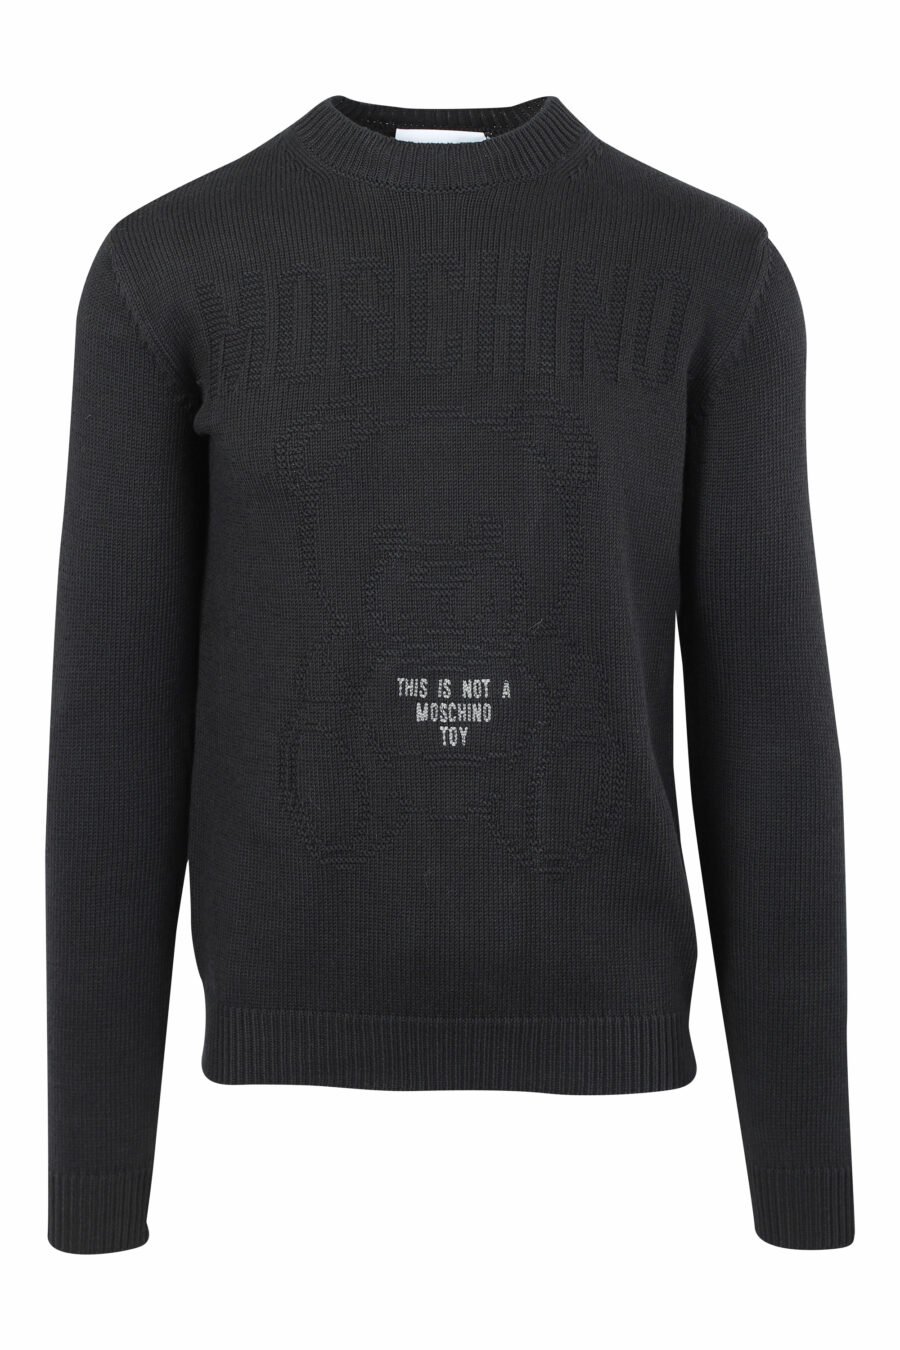 Black knitted sweatshirt with monochrome maxilogue - IMG 9667